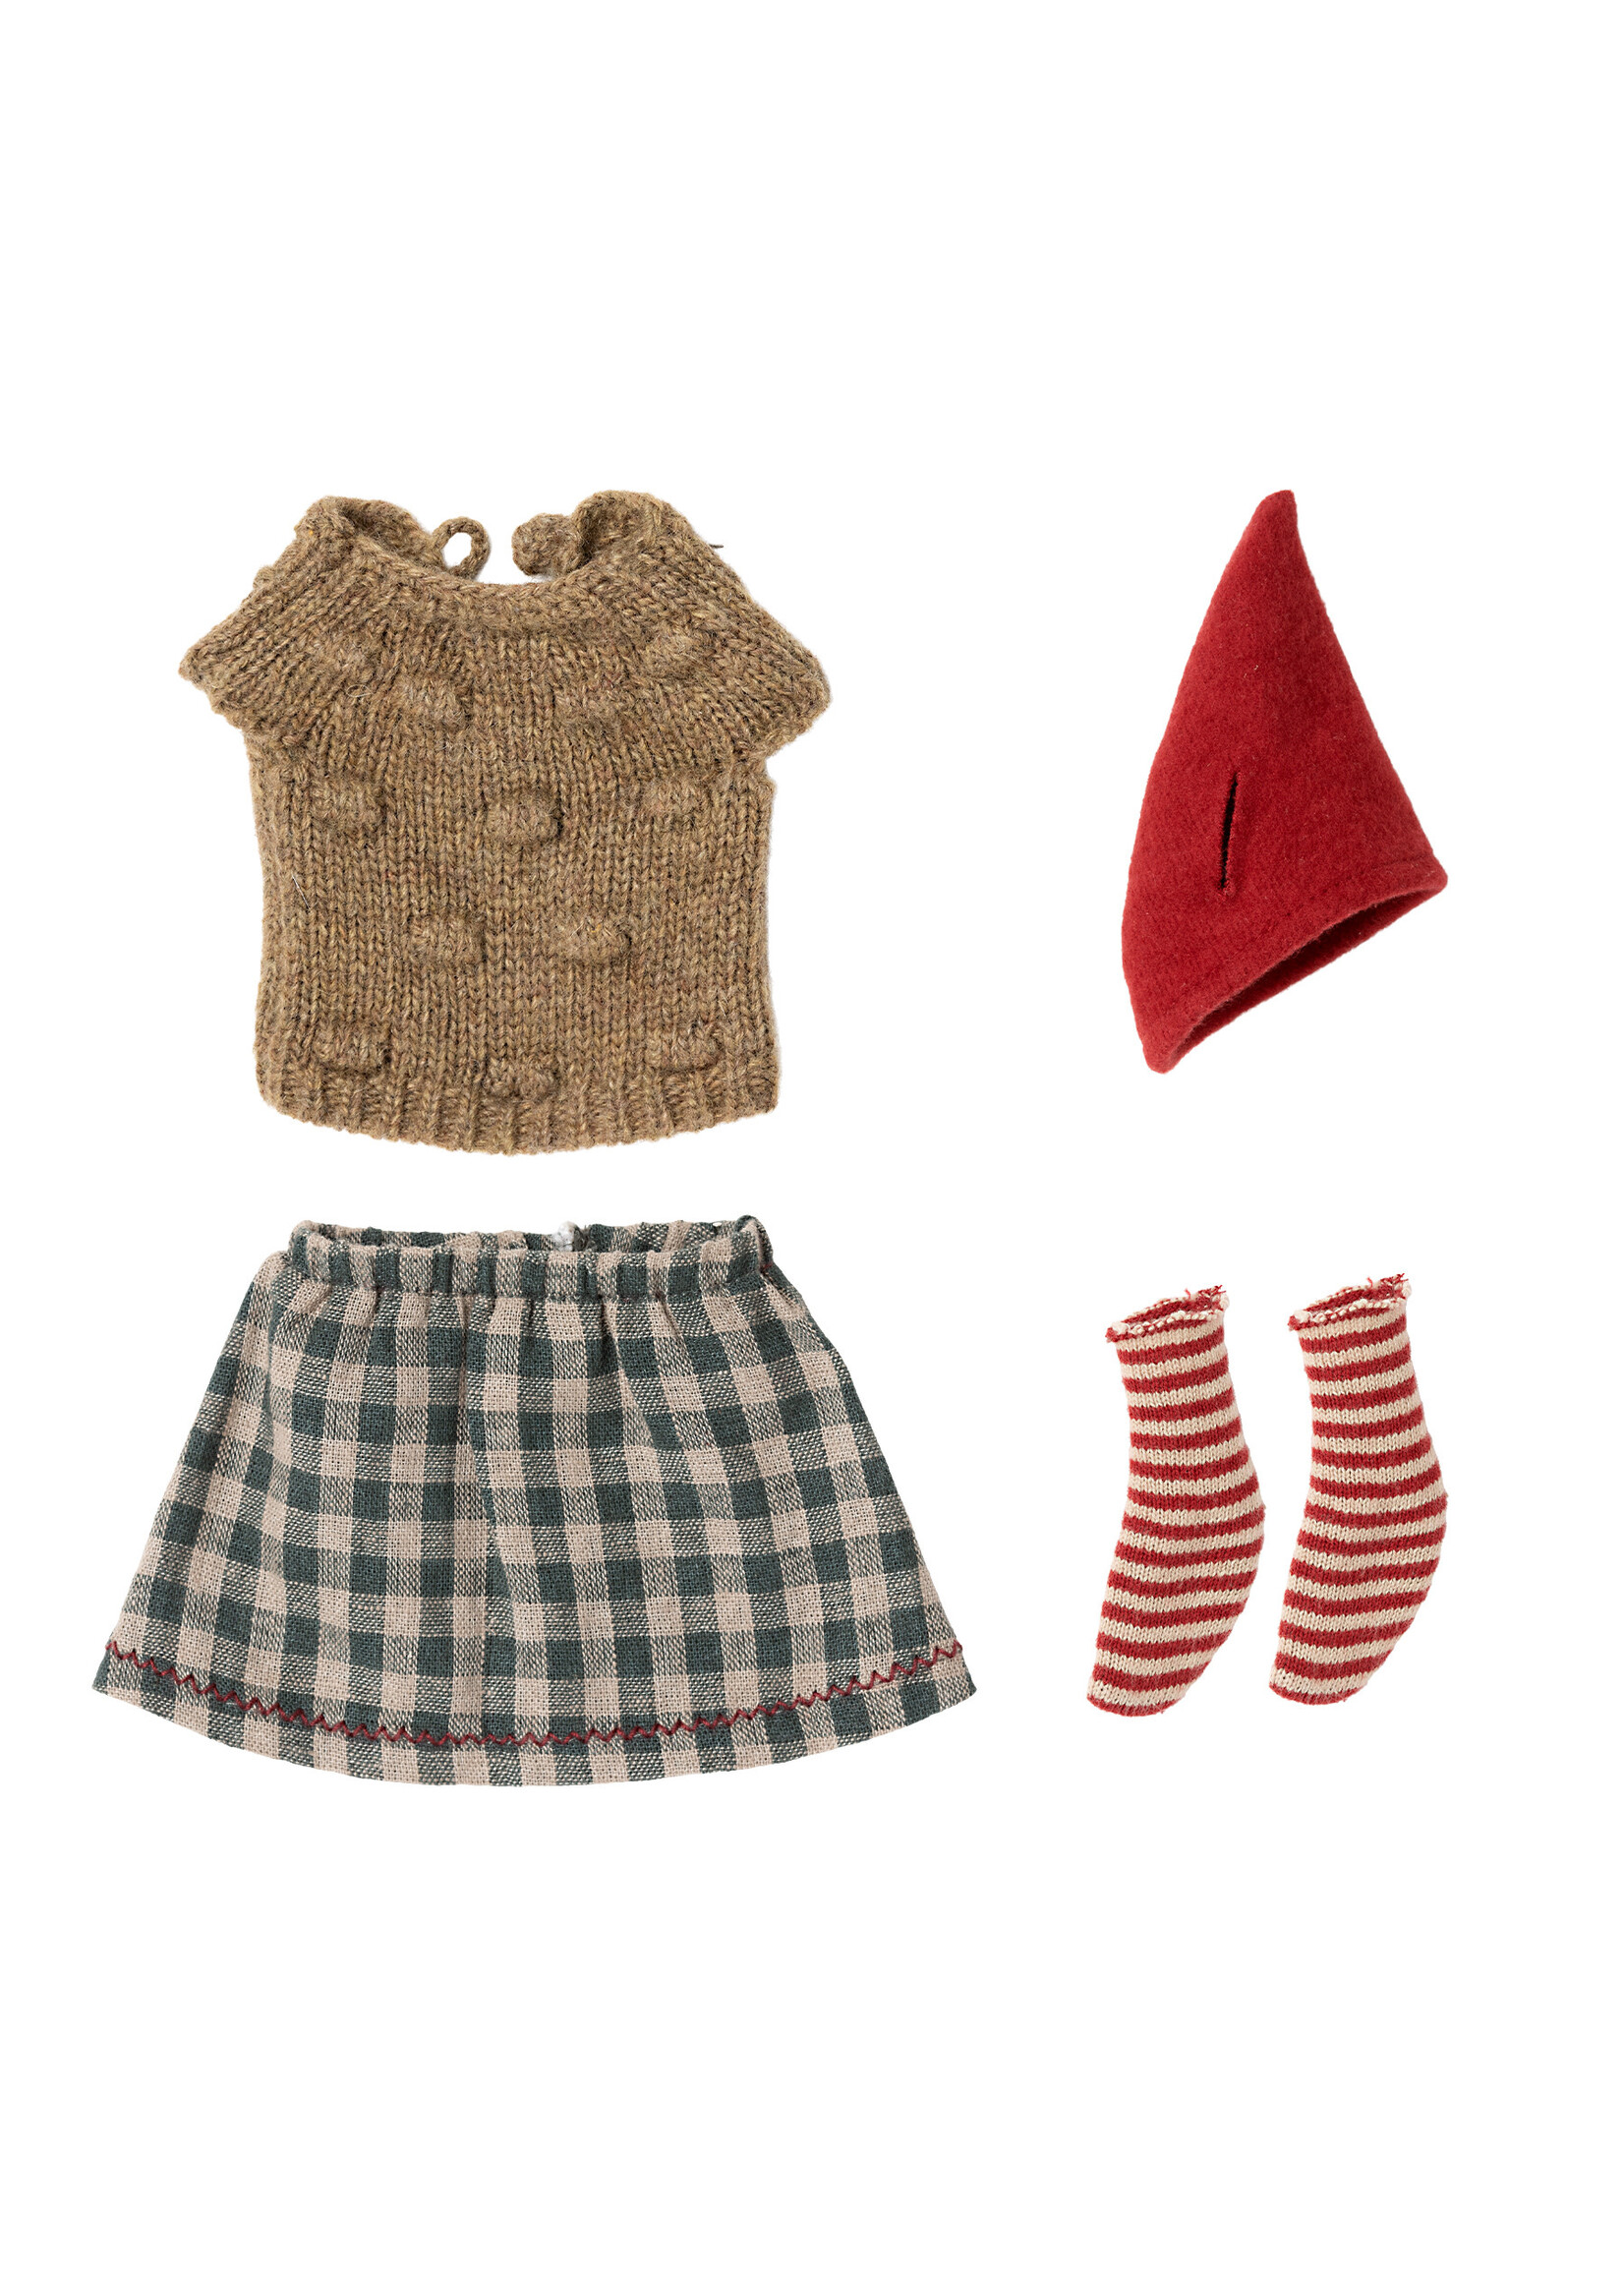 Maileg Medium Mouse - Christmas Girl Clothes